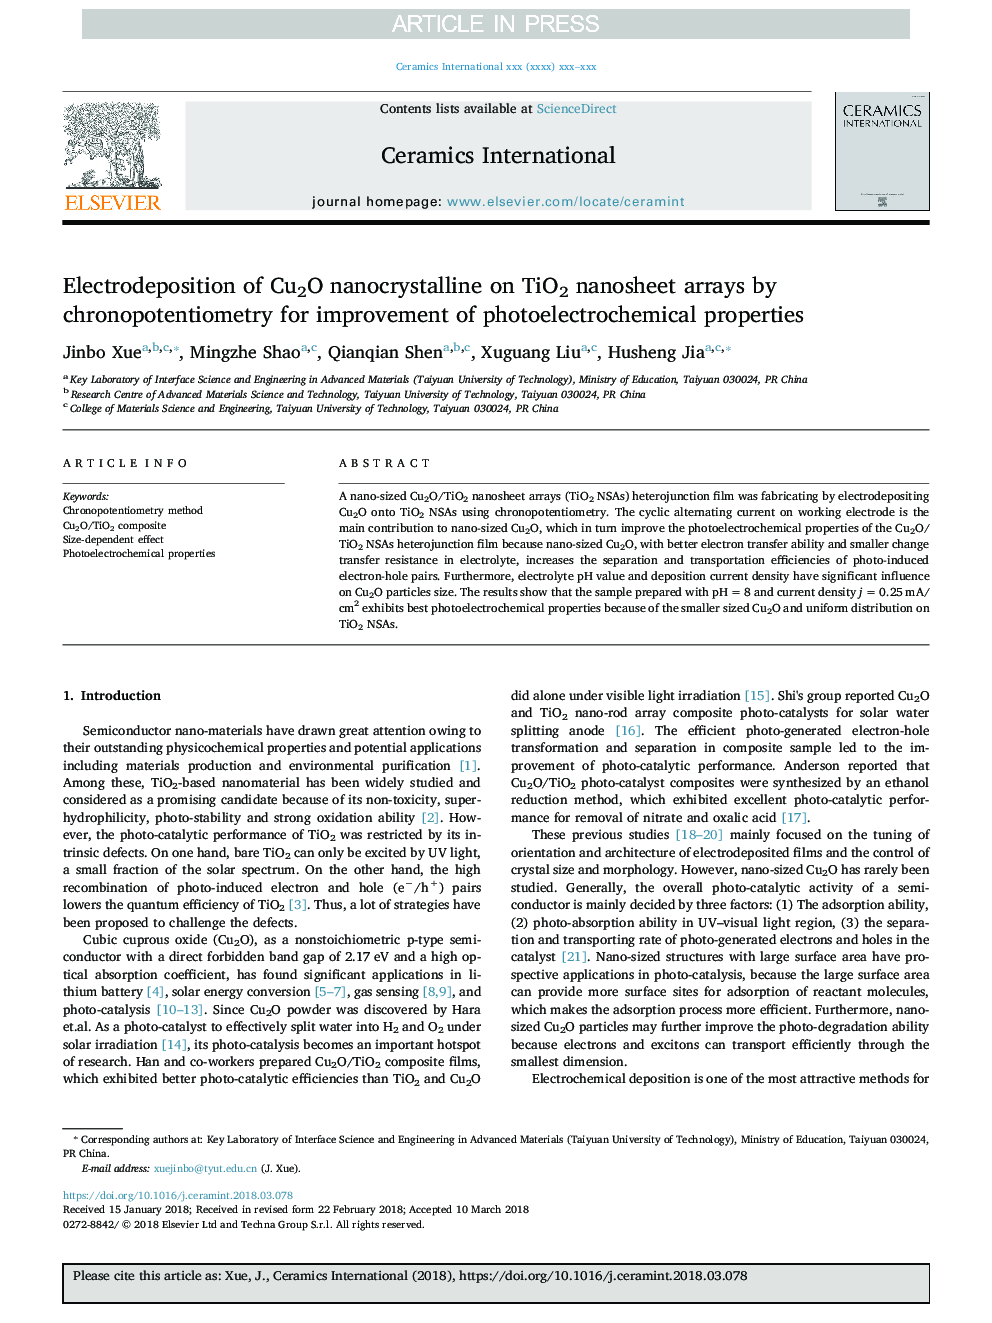 Electrodeposition of Cu2O nanocrystalline on TiO2 nanosheet arrays by chronopotentiometry for improvement of photoelectrochemical properties